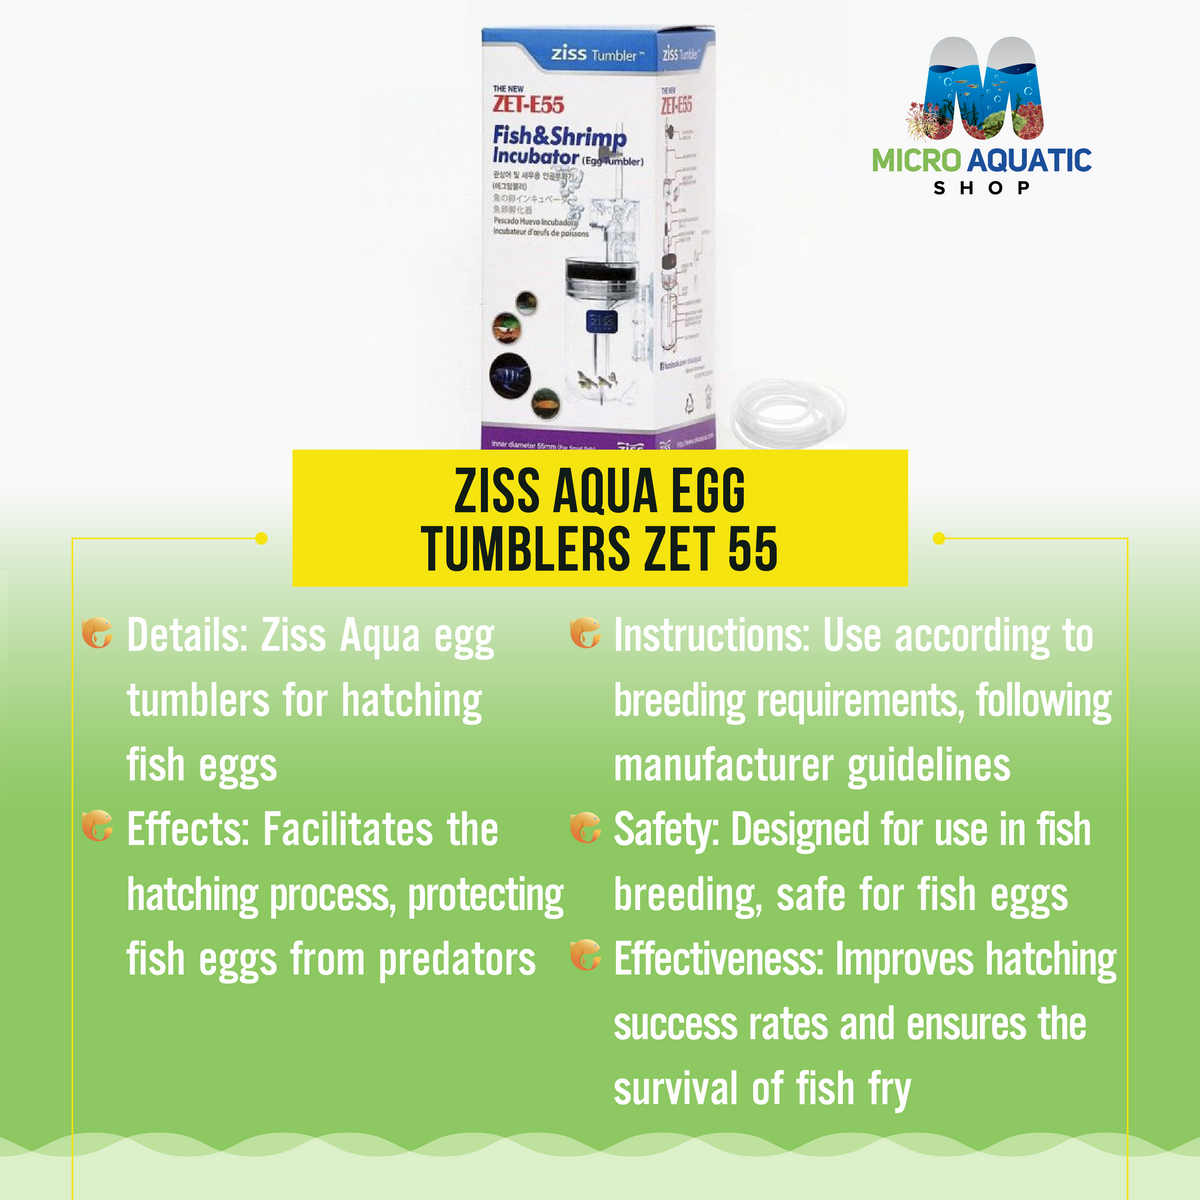 Ziss Aqua Egg Tumblers Zet 55